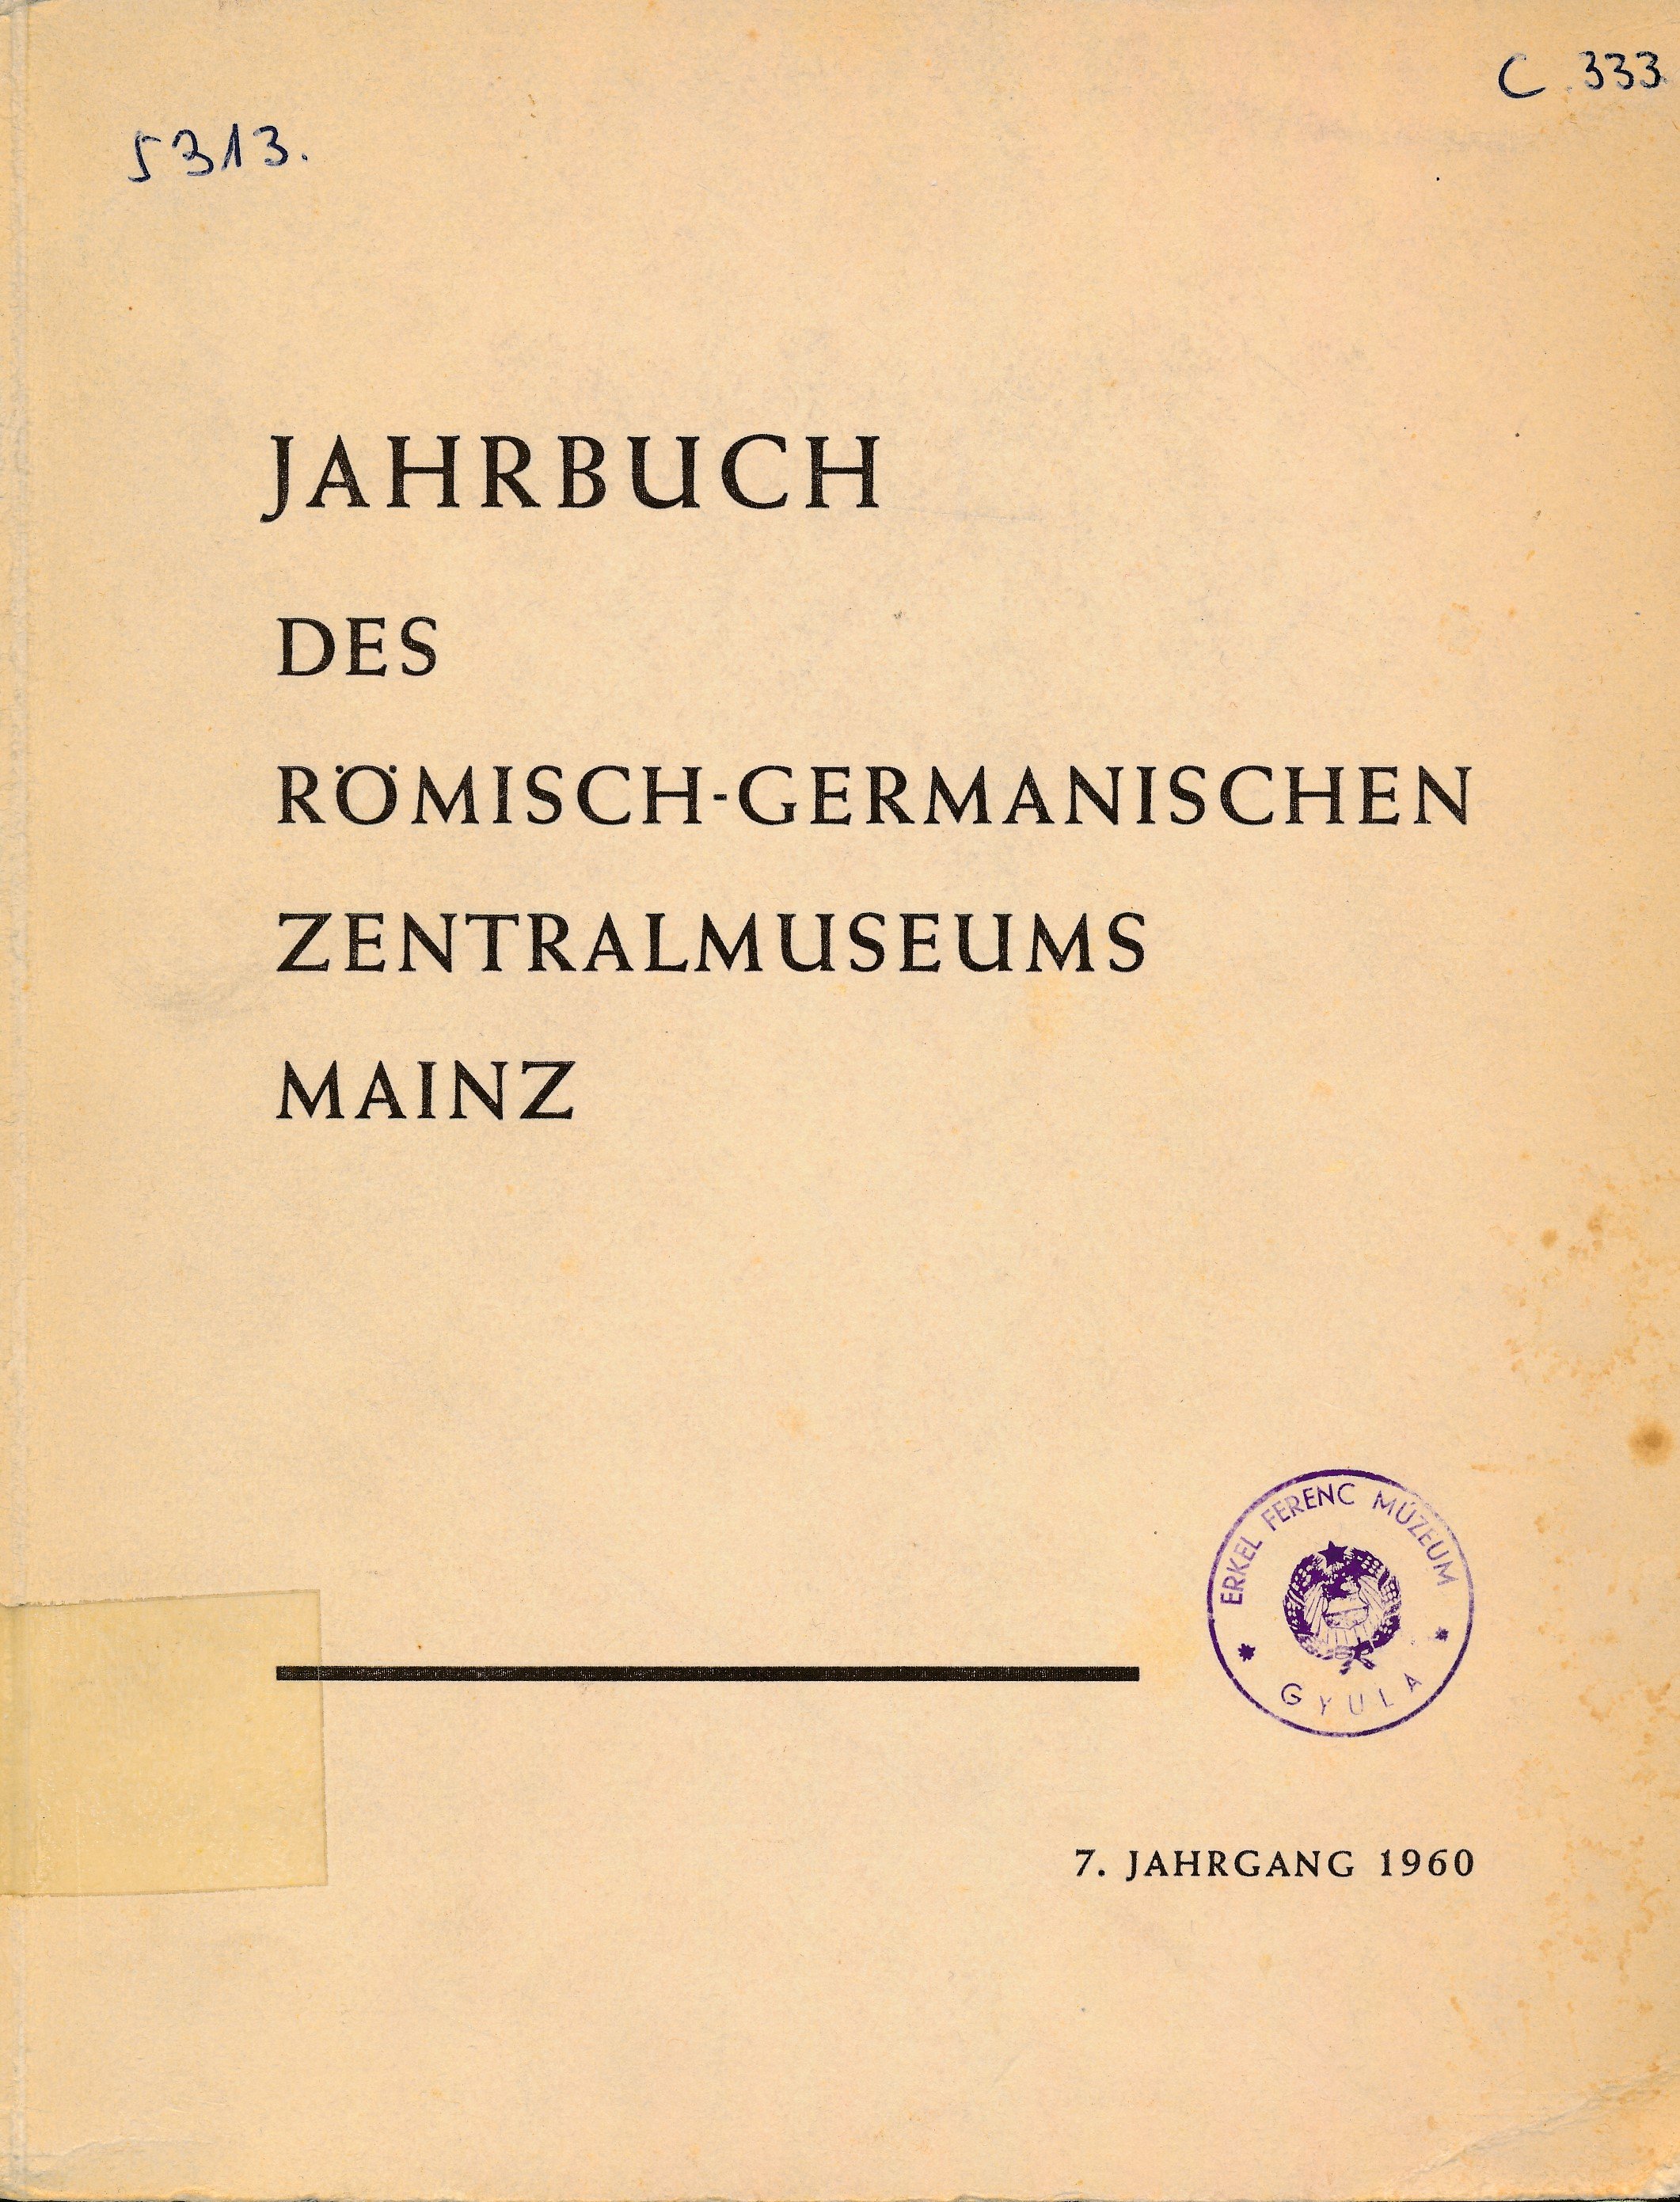 Jahrbuch des Römisch - Germanischen Zentralmuseum Mainz (Erkel Ferenc Múzeum és Könyvtár, Gyula CC BY-NC-SA)